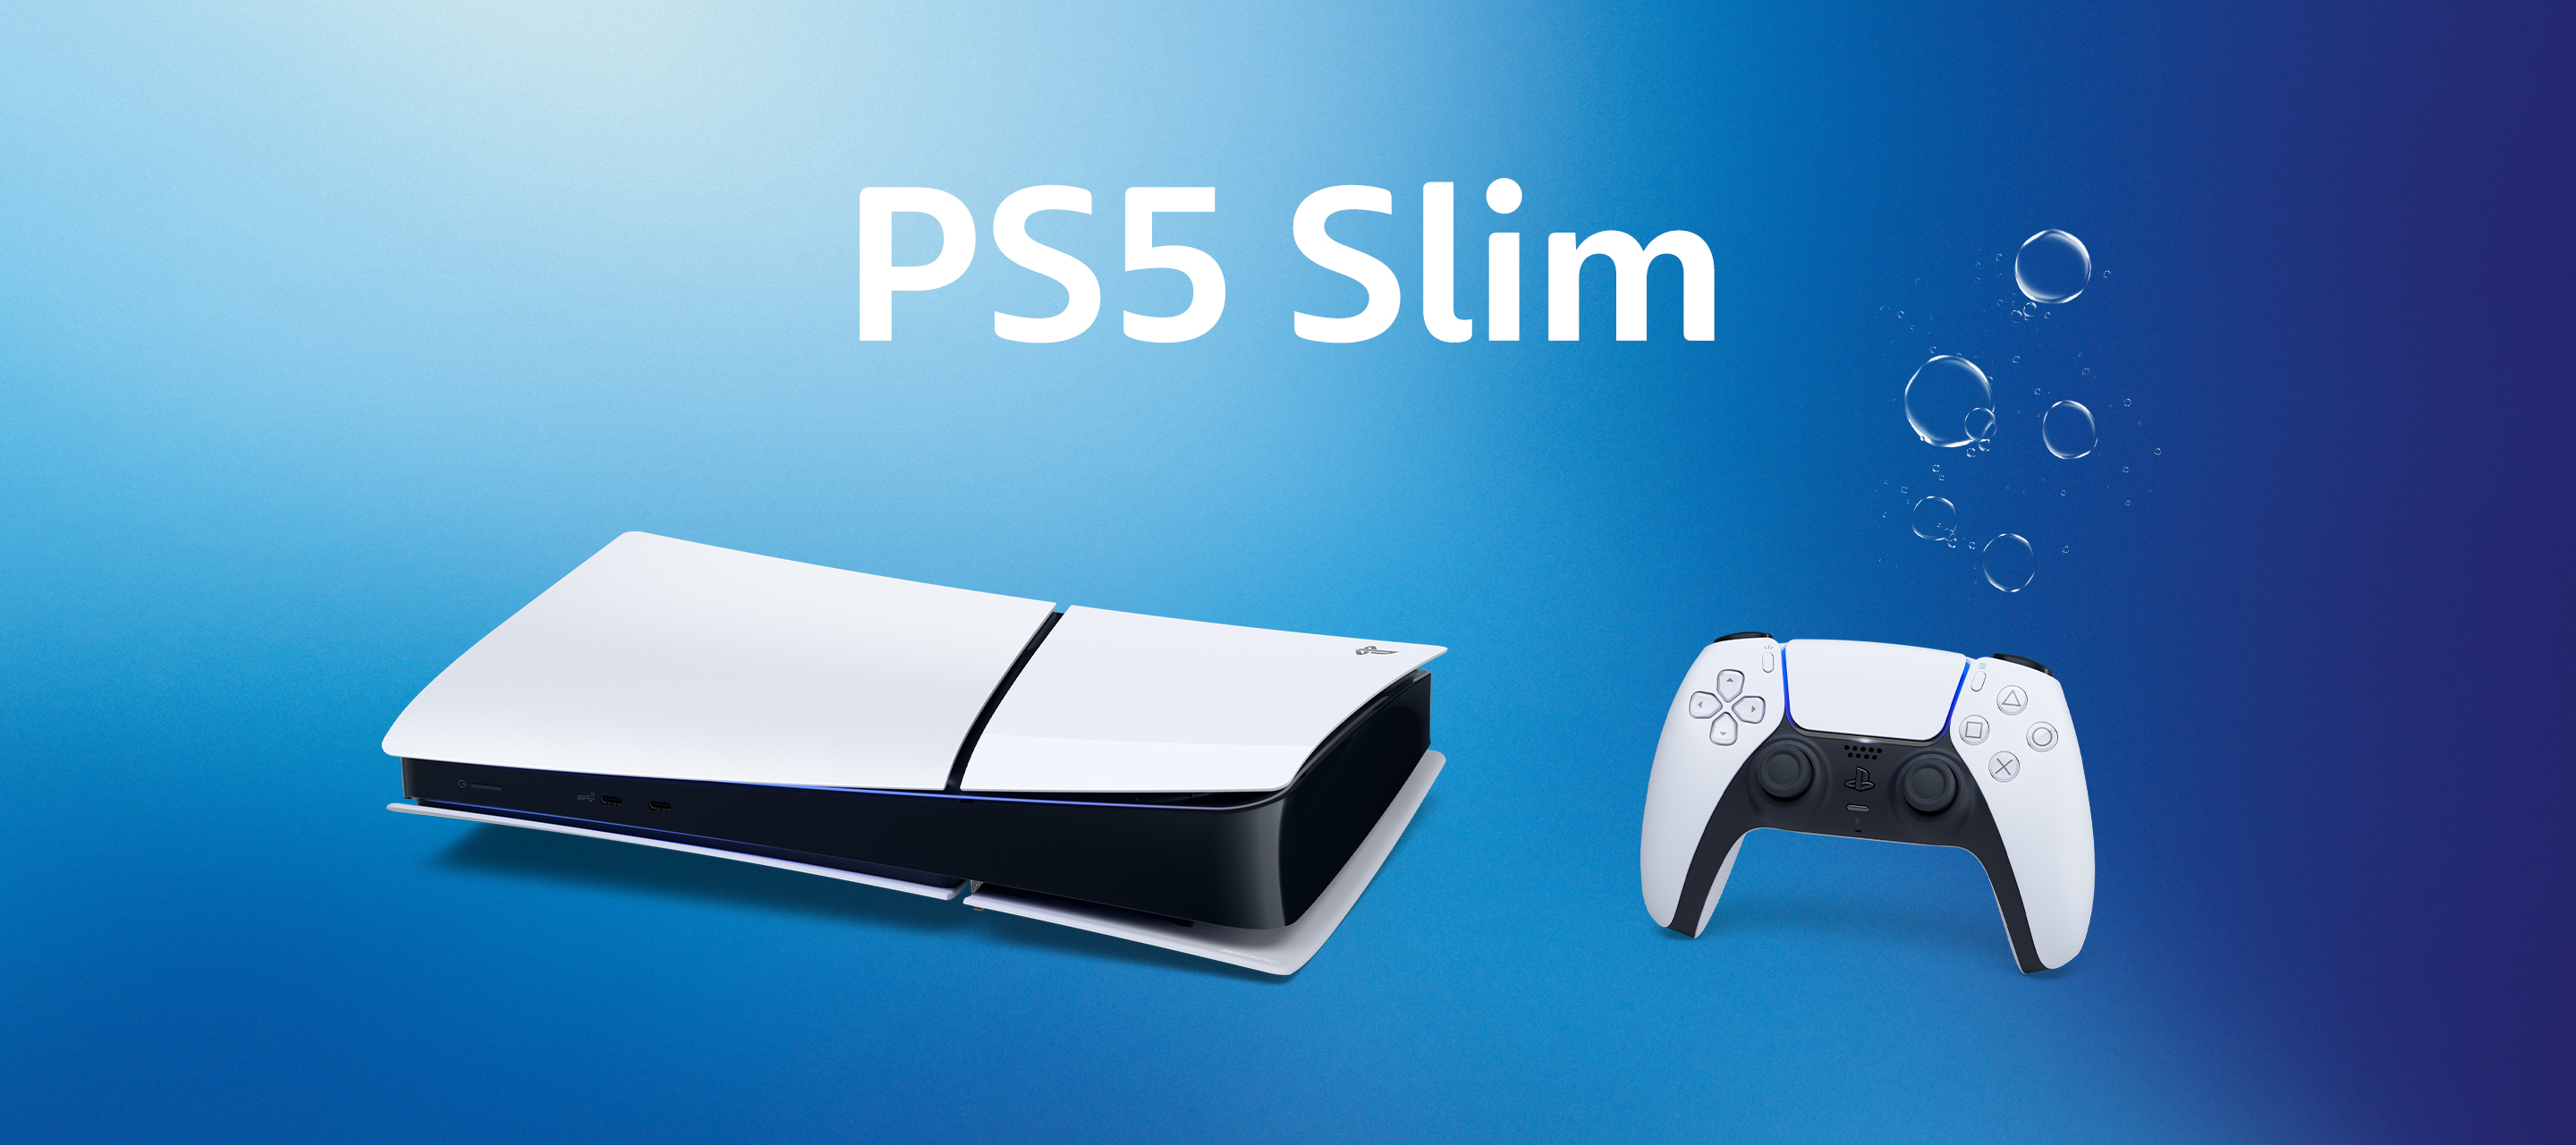 Kompakter aber genauso stark - Die PlayStation 5 Slim